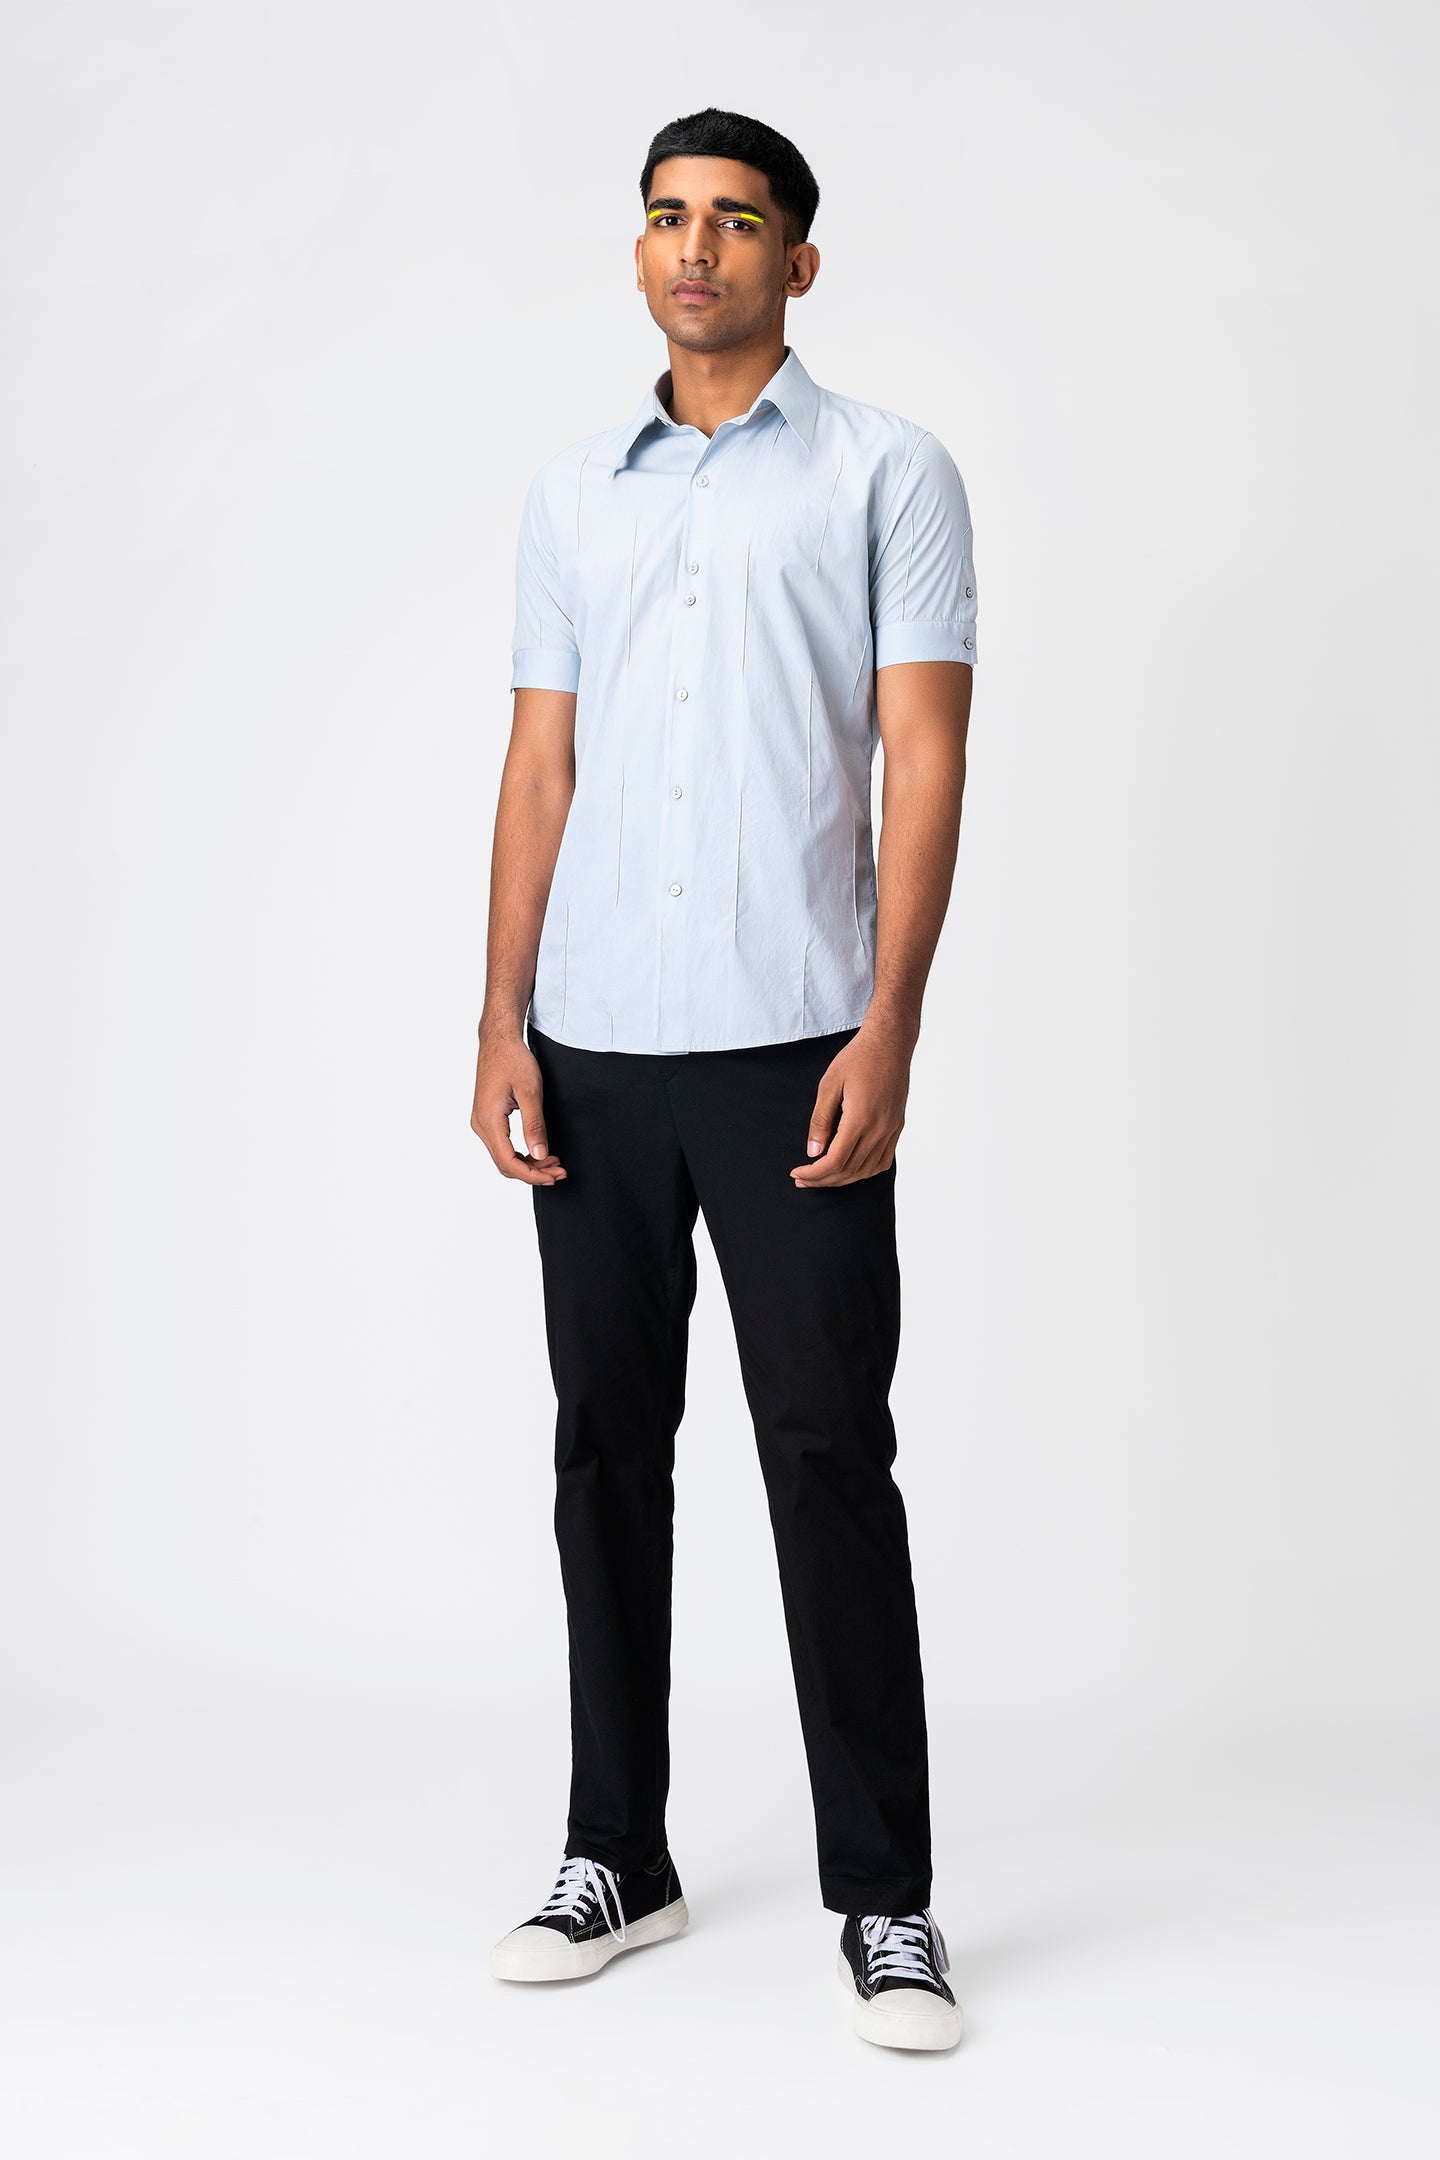 cotton-half-sleeved-shirt - Genes online store 2020